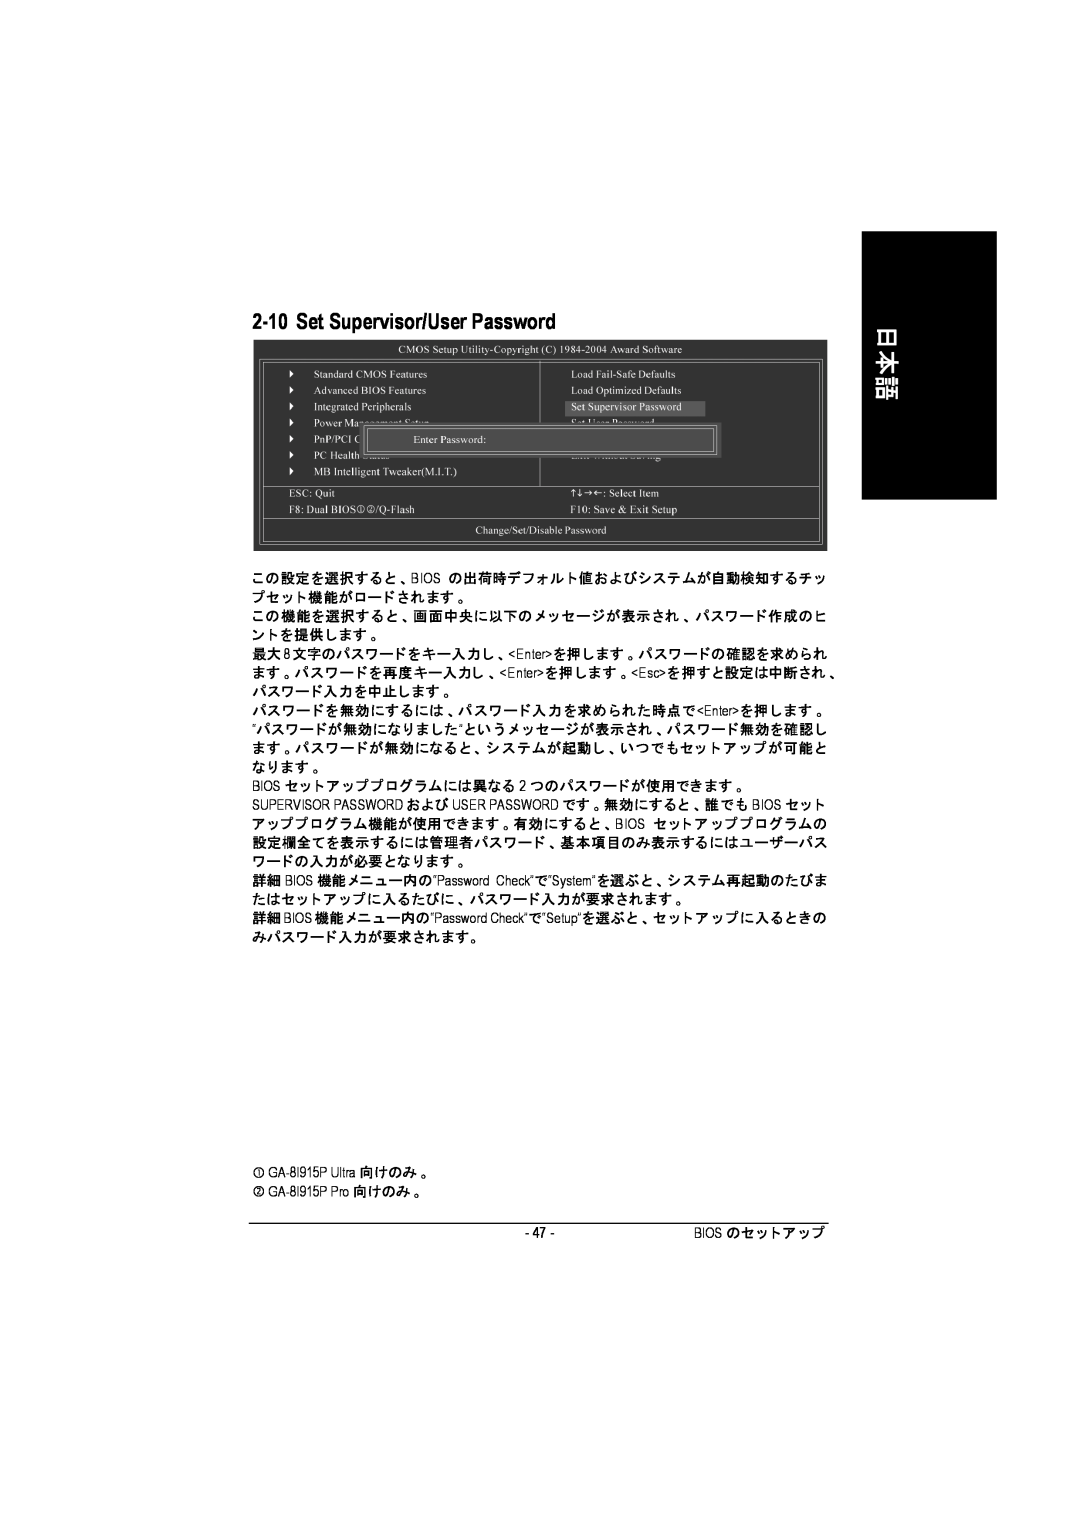 Intel GA-8I915P manual Set Supervisor/User Password 